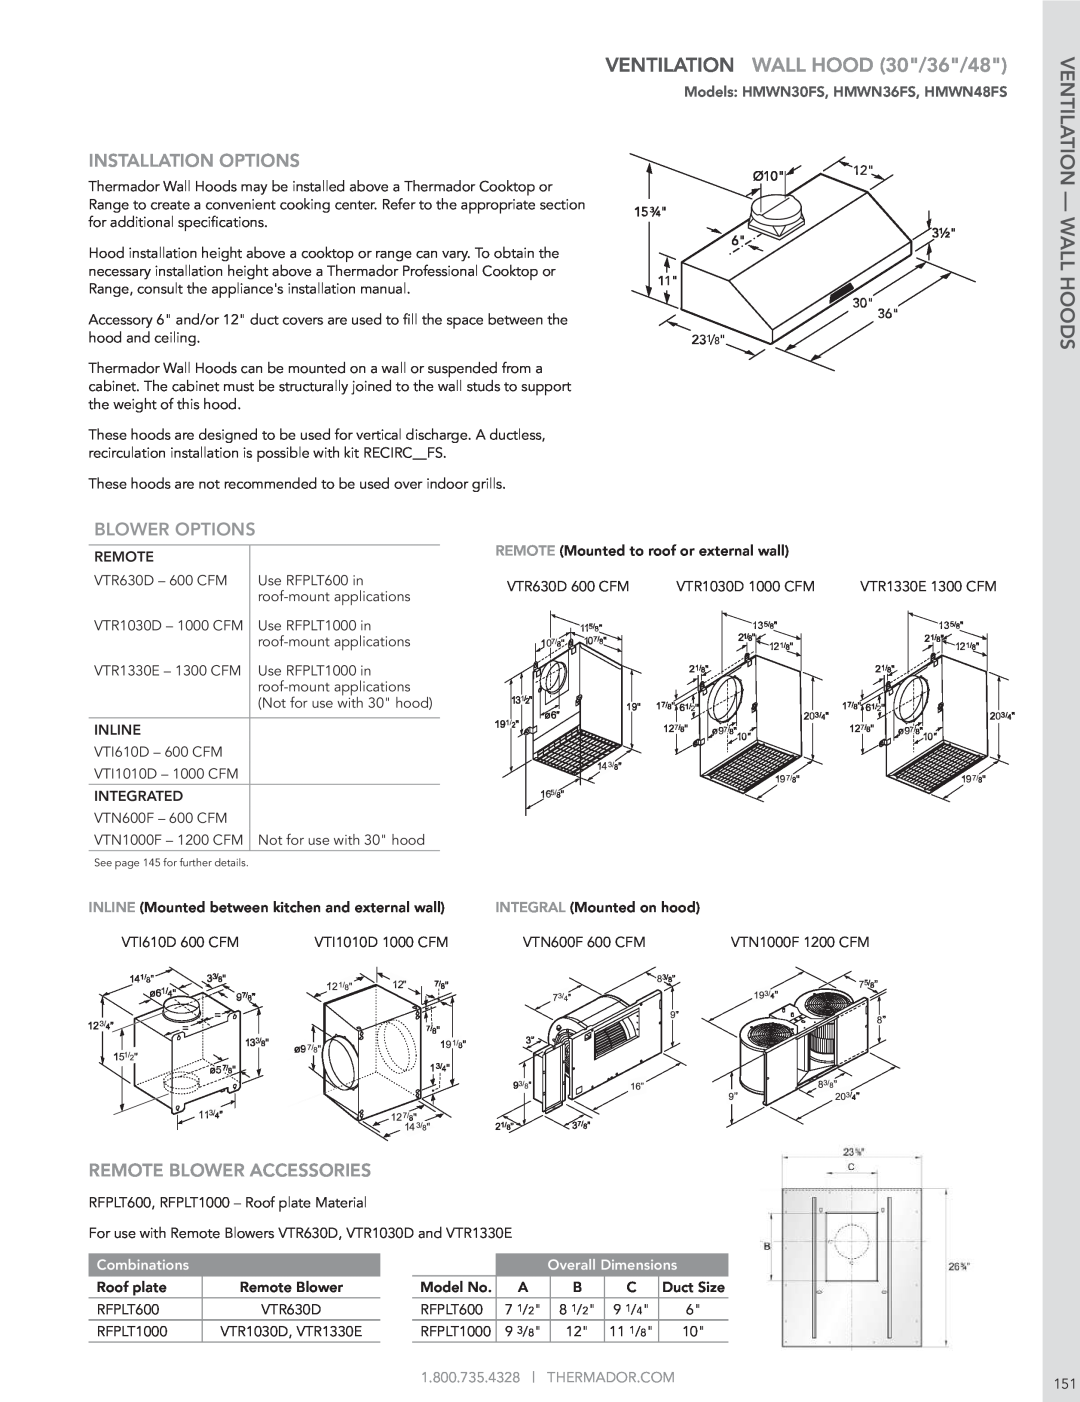 Thermador HMWB36FS manual VENTILATION WALL HOOD 30/36/48, Ventilation - Wall Hoods, Installation Options, Blower Options 